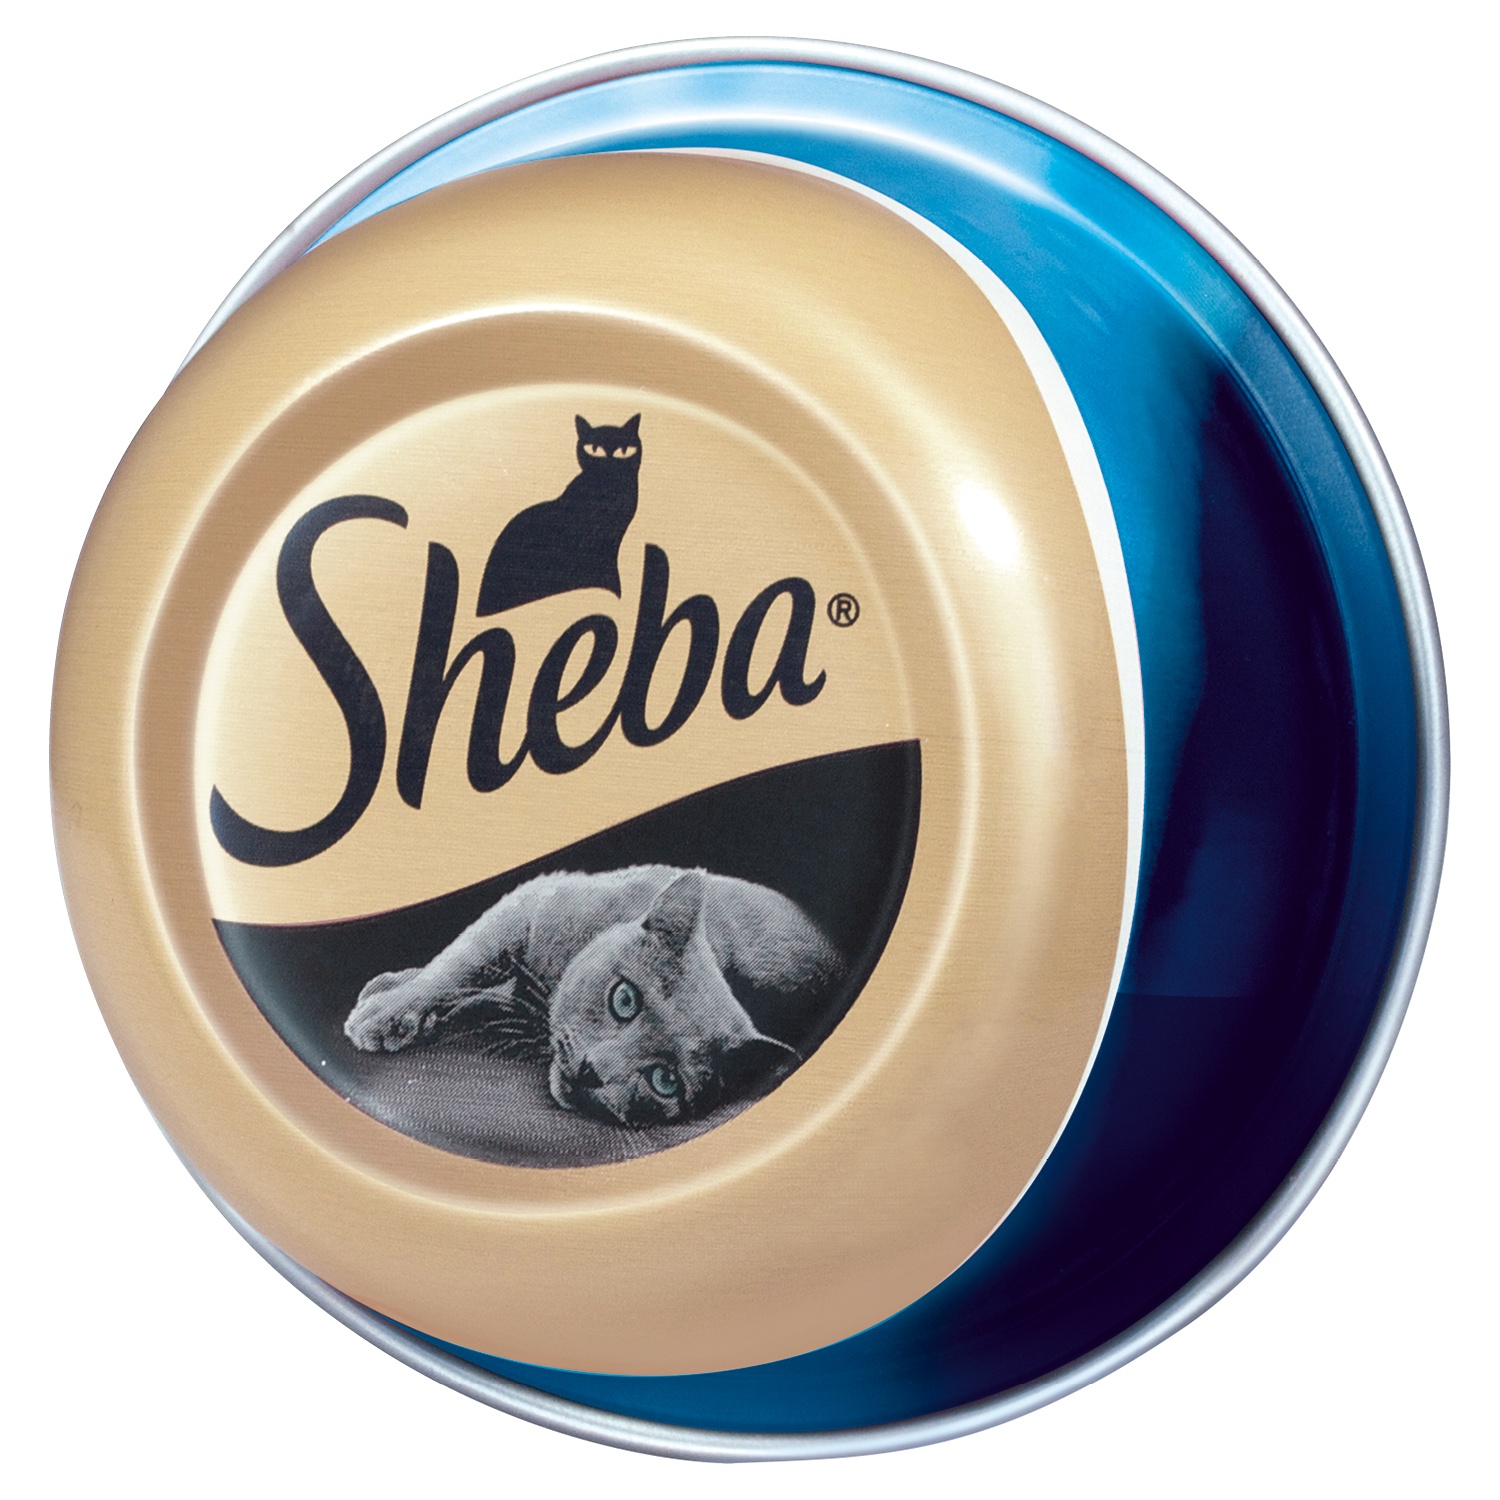 Sheba® Katzennassfutter oder Katzensnack 80g